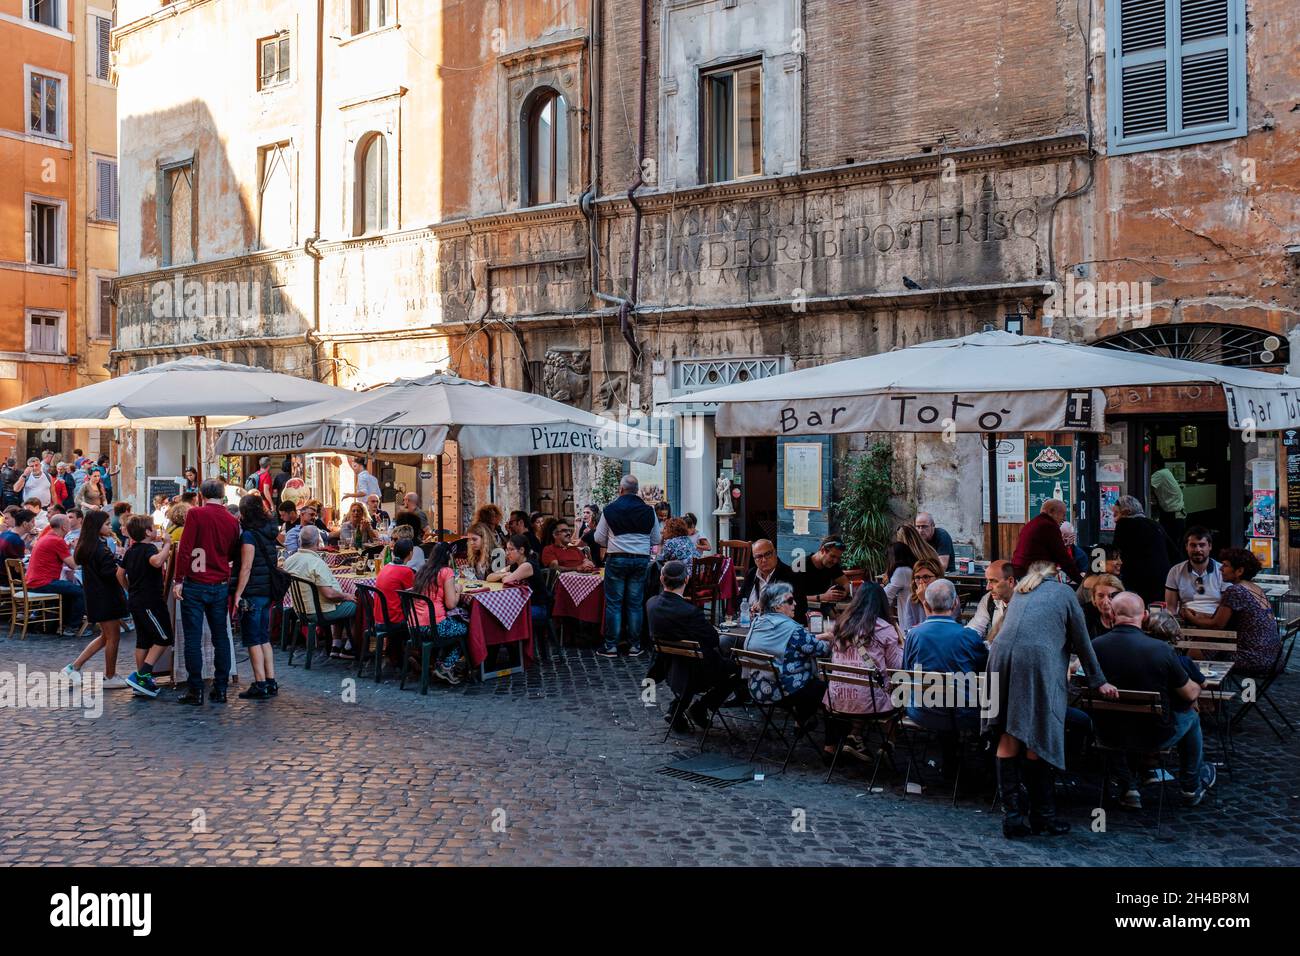 Via del Portico d'Ottavia, Il Portico Restaurant, Bar ToTo, people dining outside, street dining, Rome, Italy Stock Photo